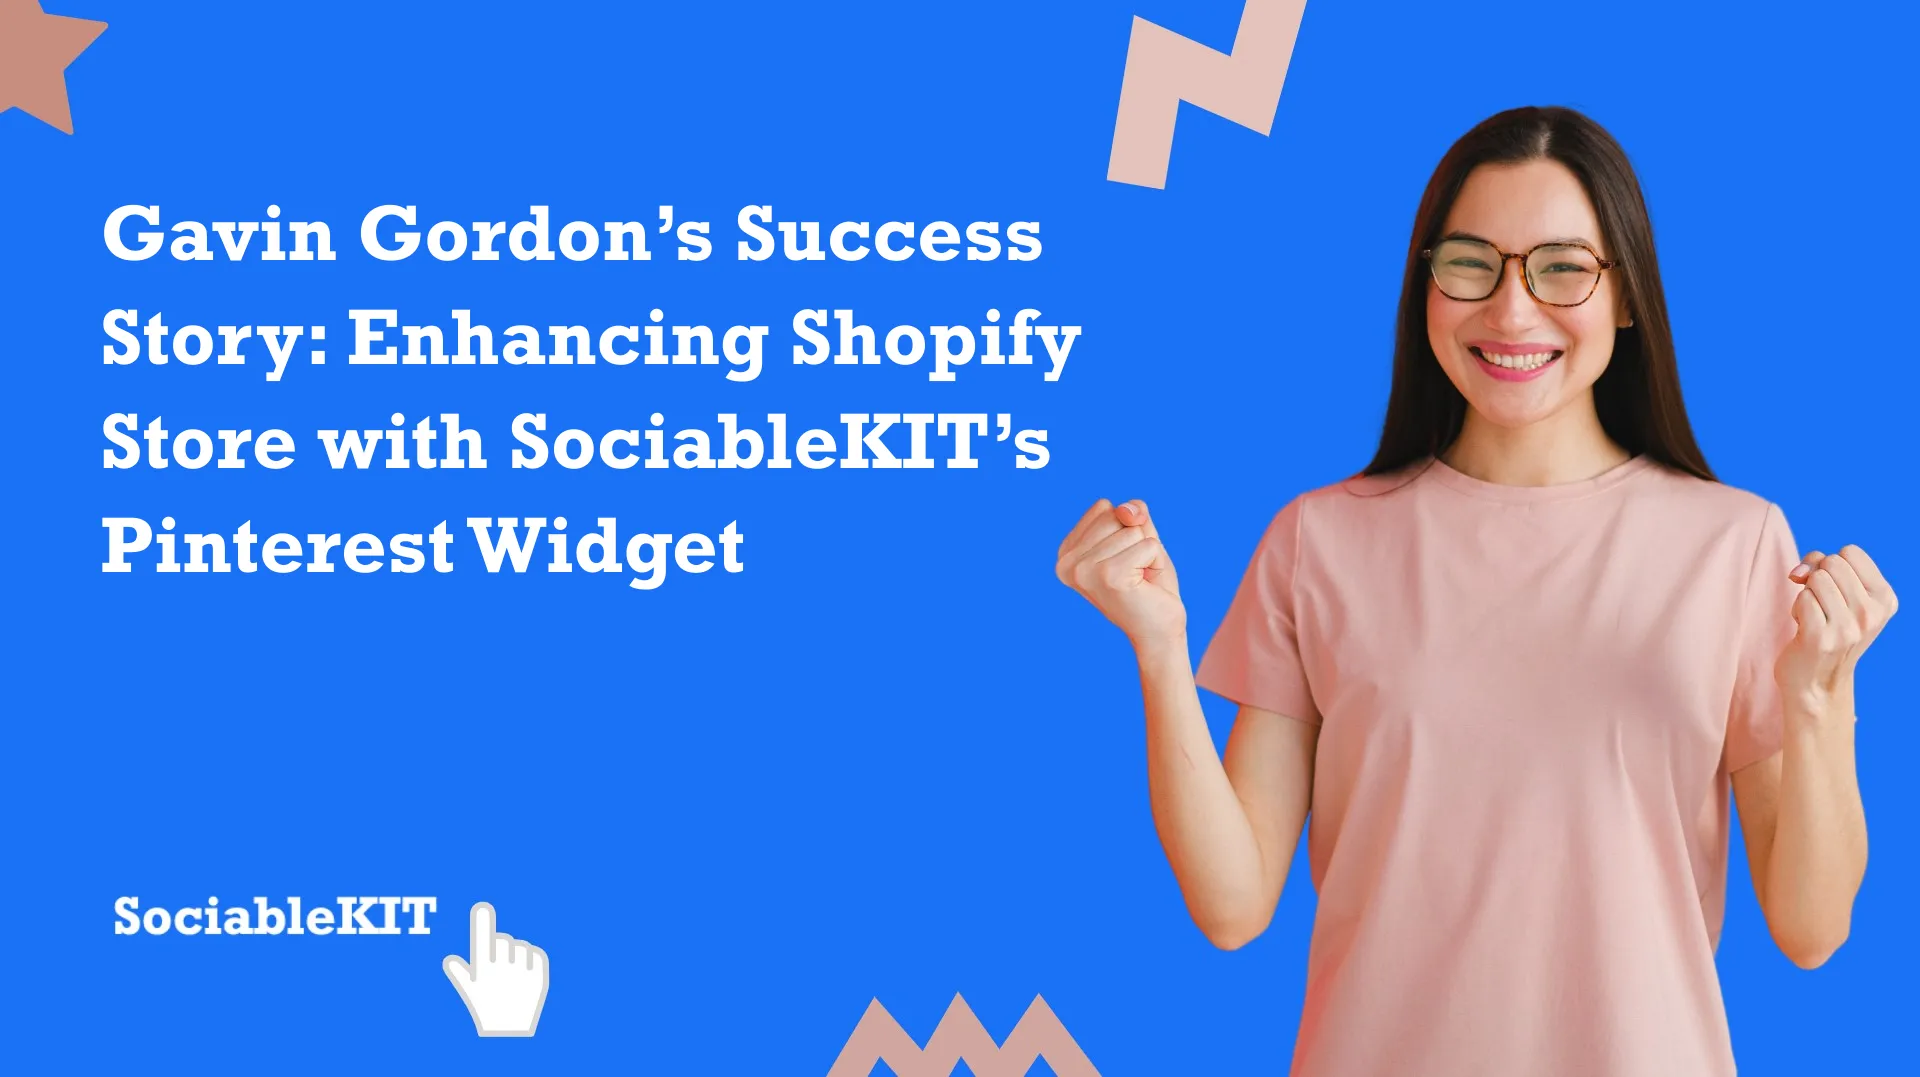 Gavin Gordon’s Success Story: Enhancing Shopify Store with SociableKIT’s Pinterest Widget